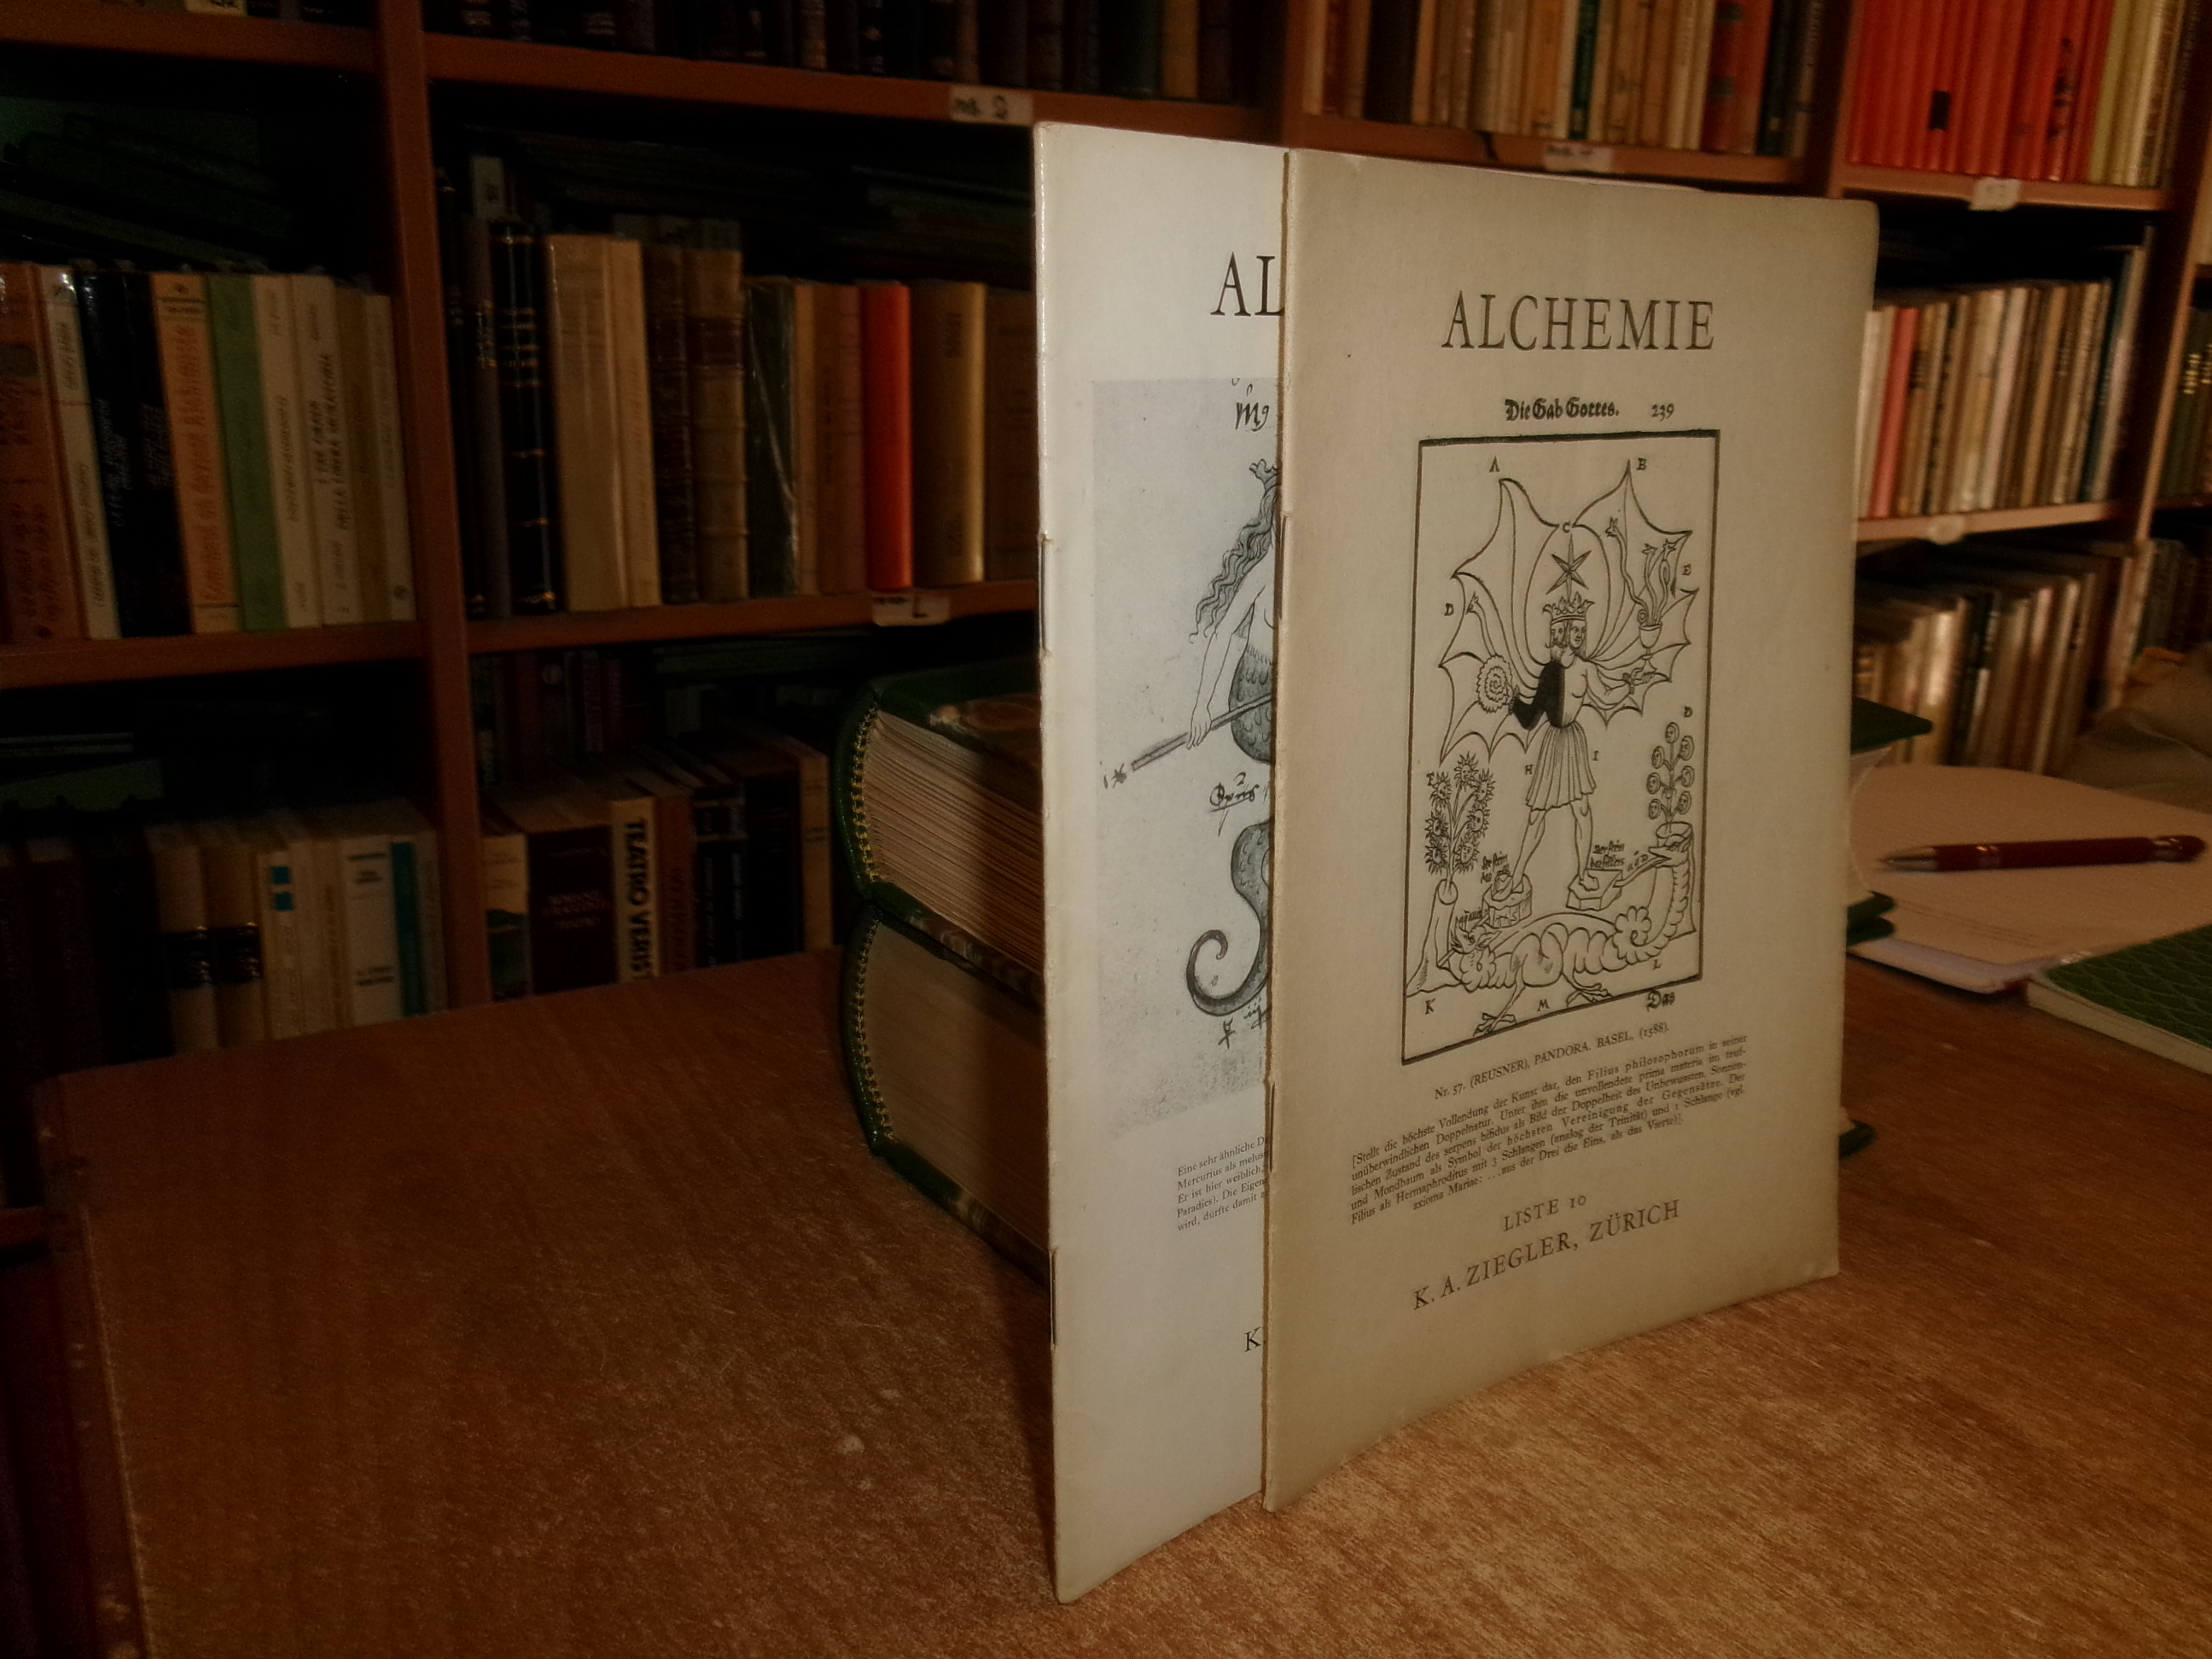 ALCHEMIE ALCHIMIA 2 cataloghi di K. A. ZIEGLER, ZURICH